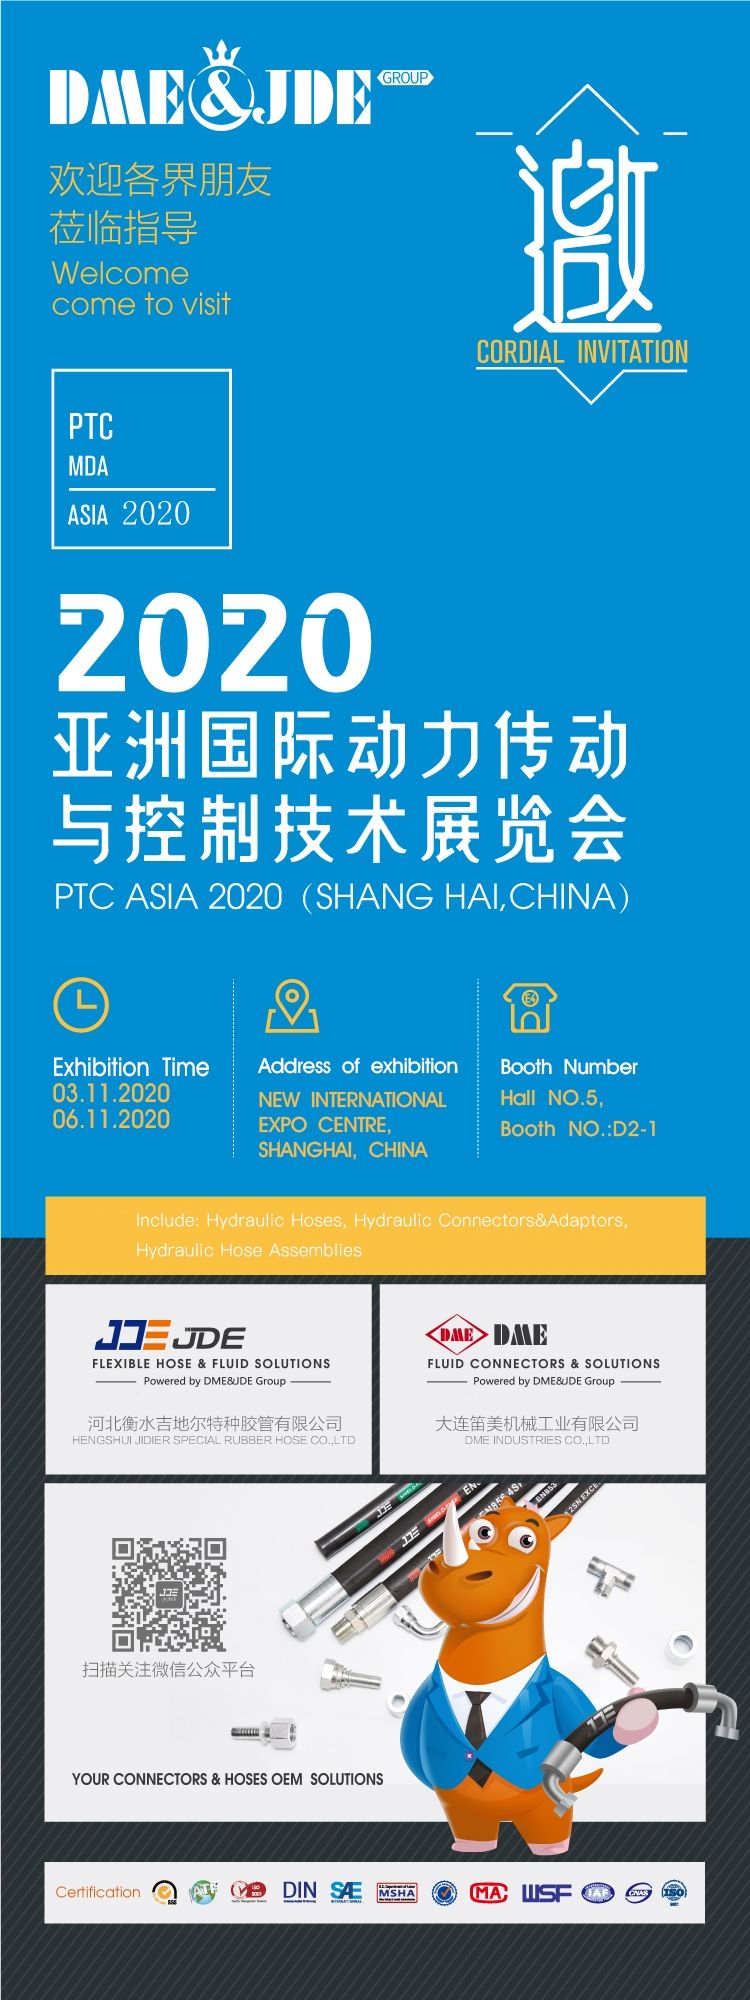 The DME&JDE invitation of PTC Asia 2020 exhibition.